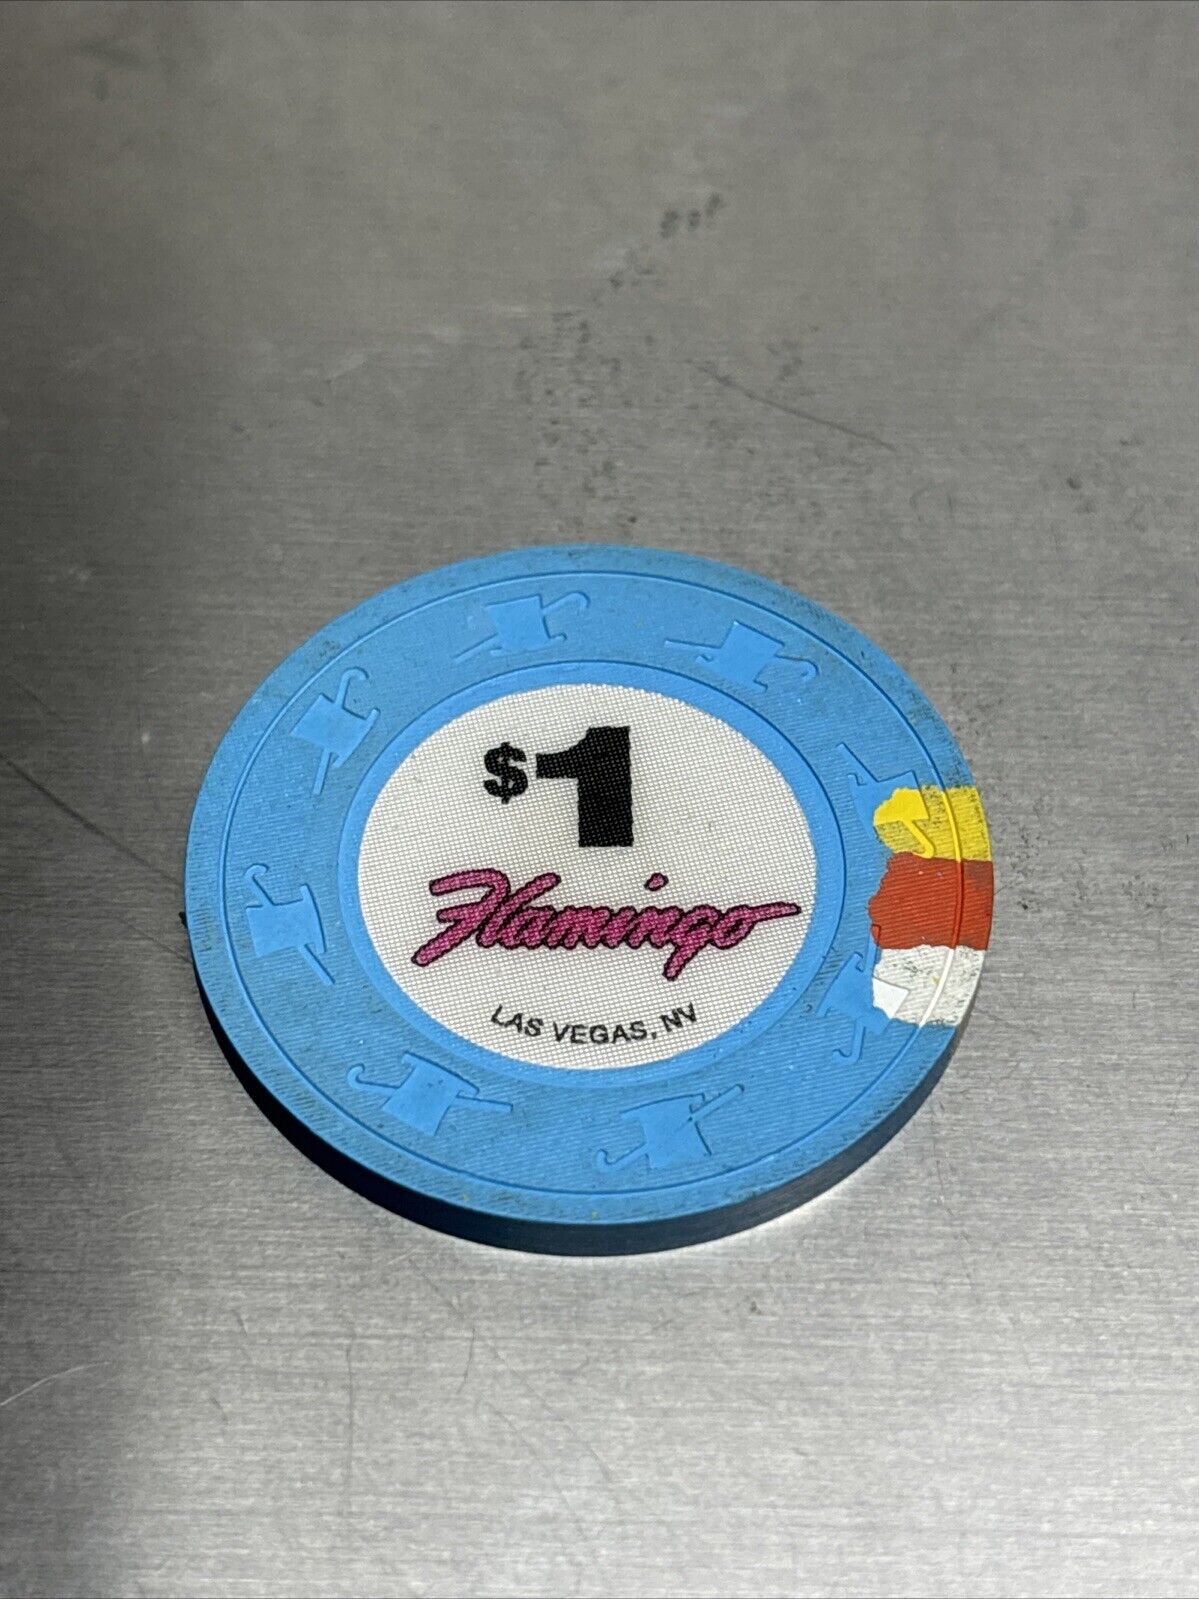 Flamingo Hotel & Casino $1 Chip, 2004 edition